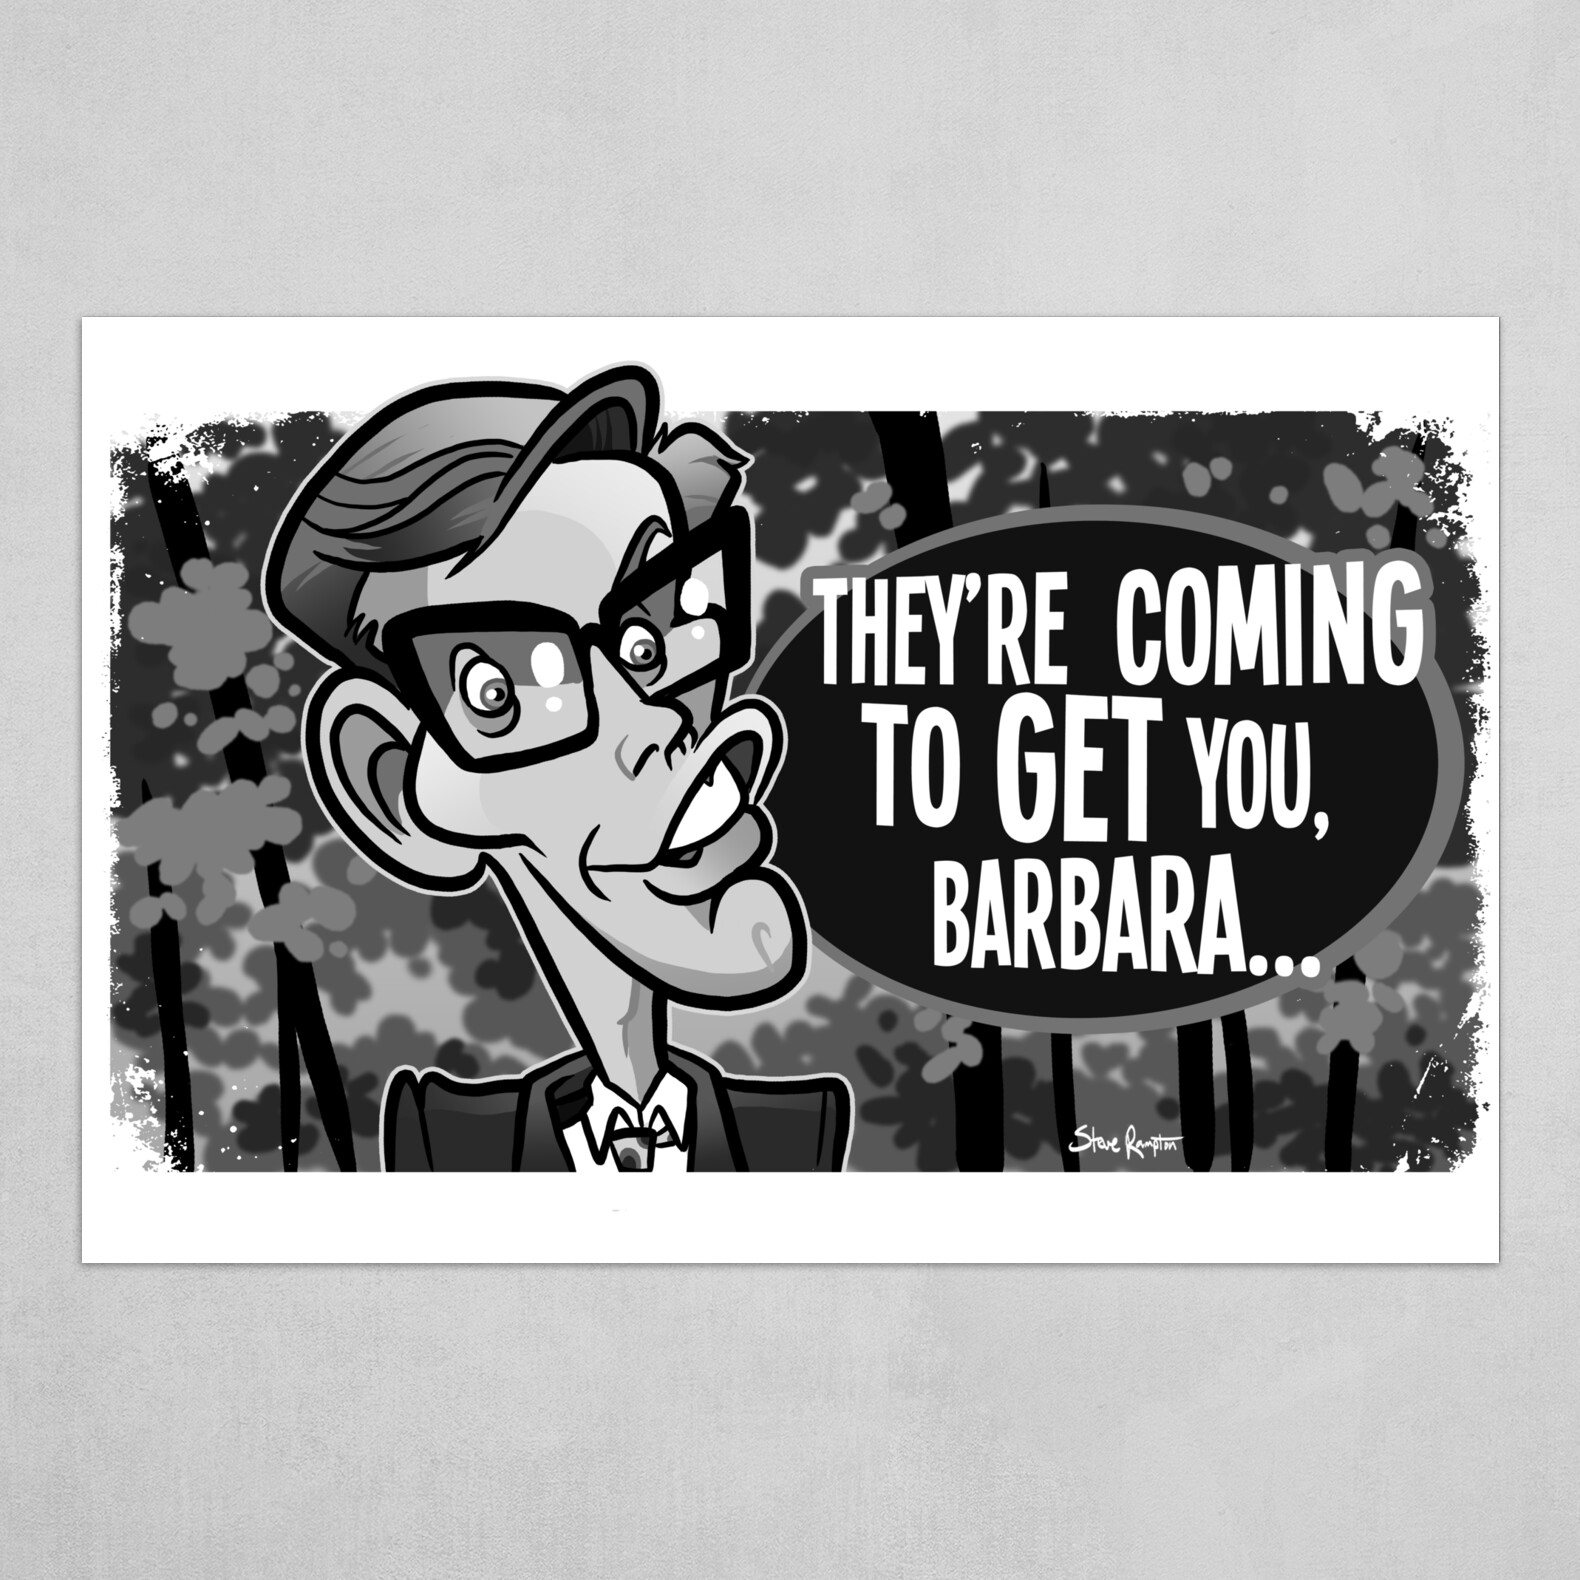 Coming to Get You, Barbara